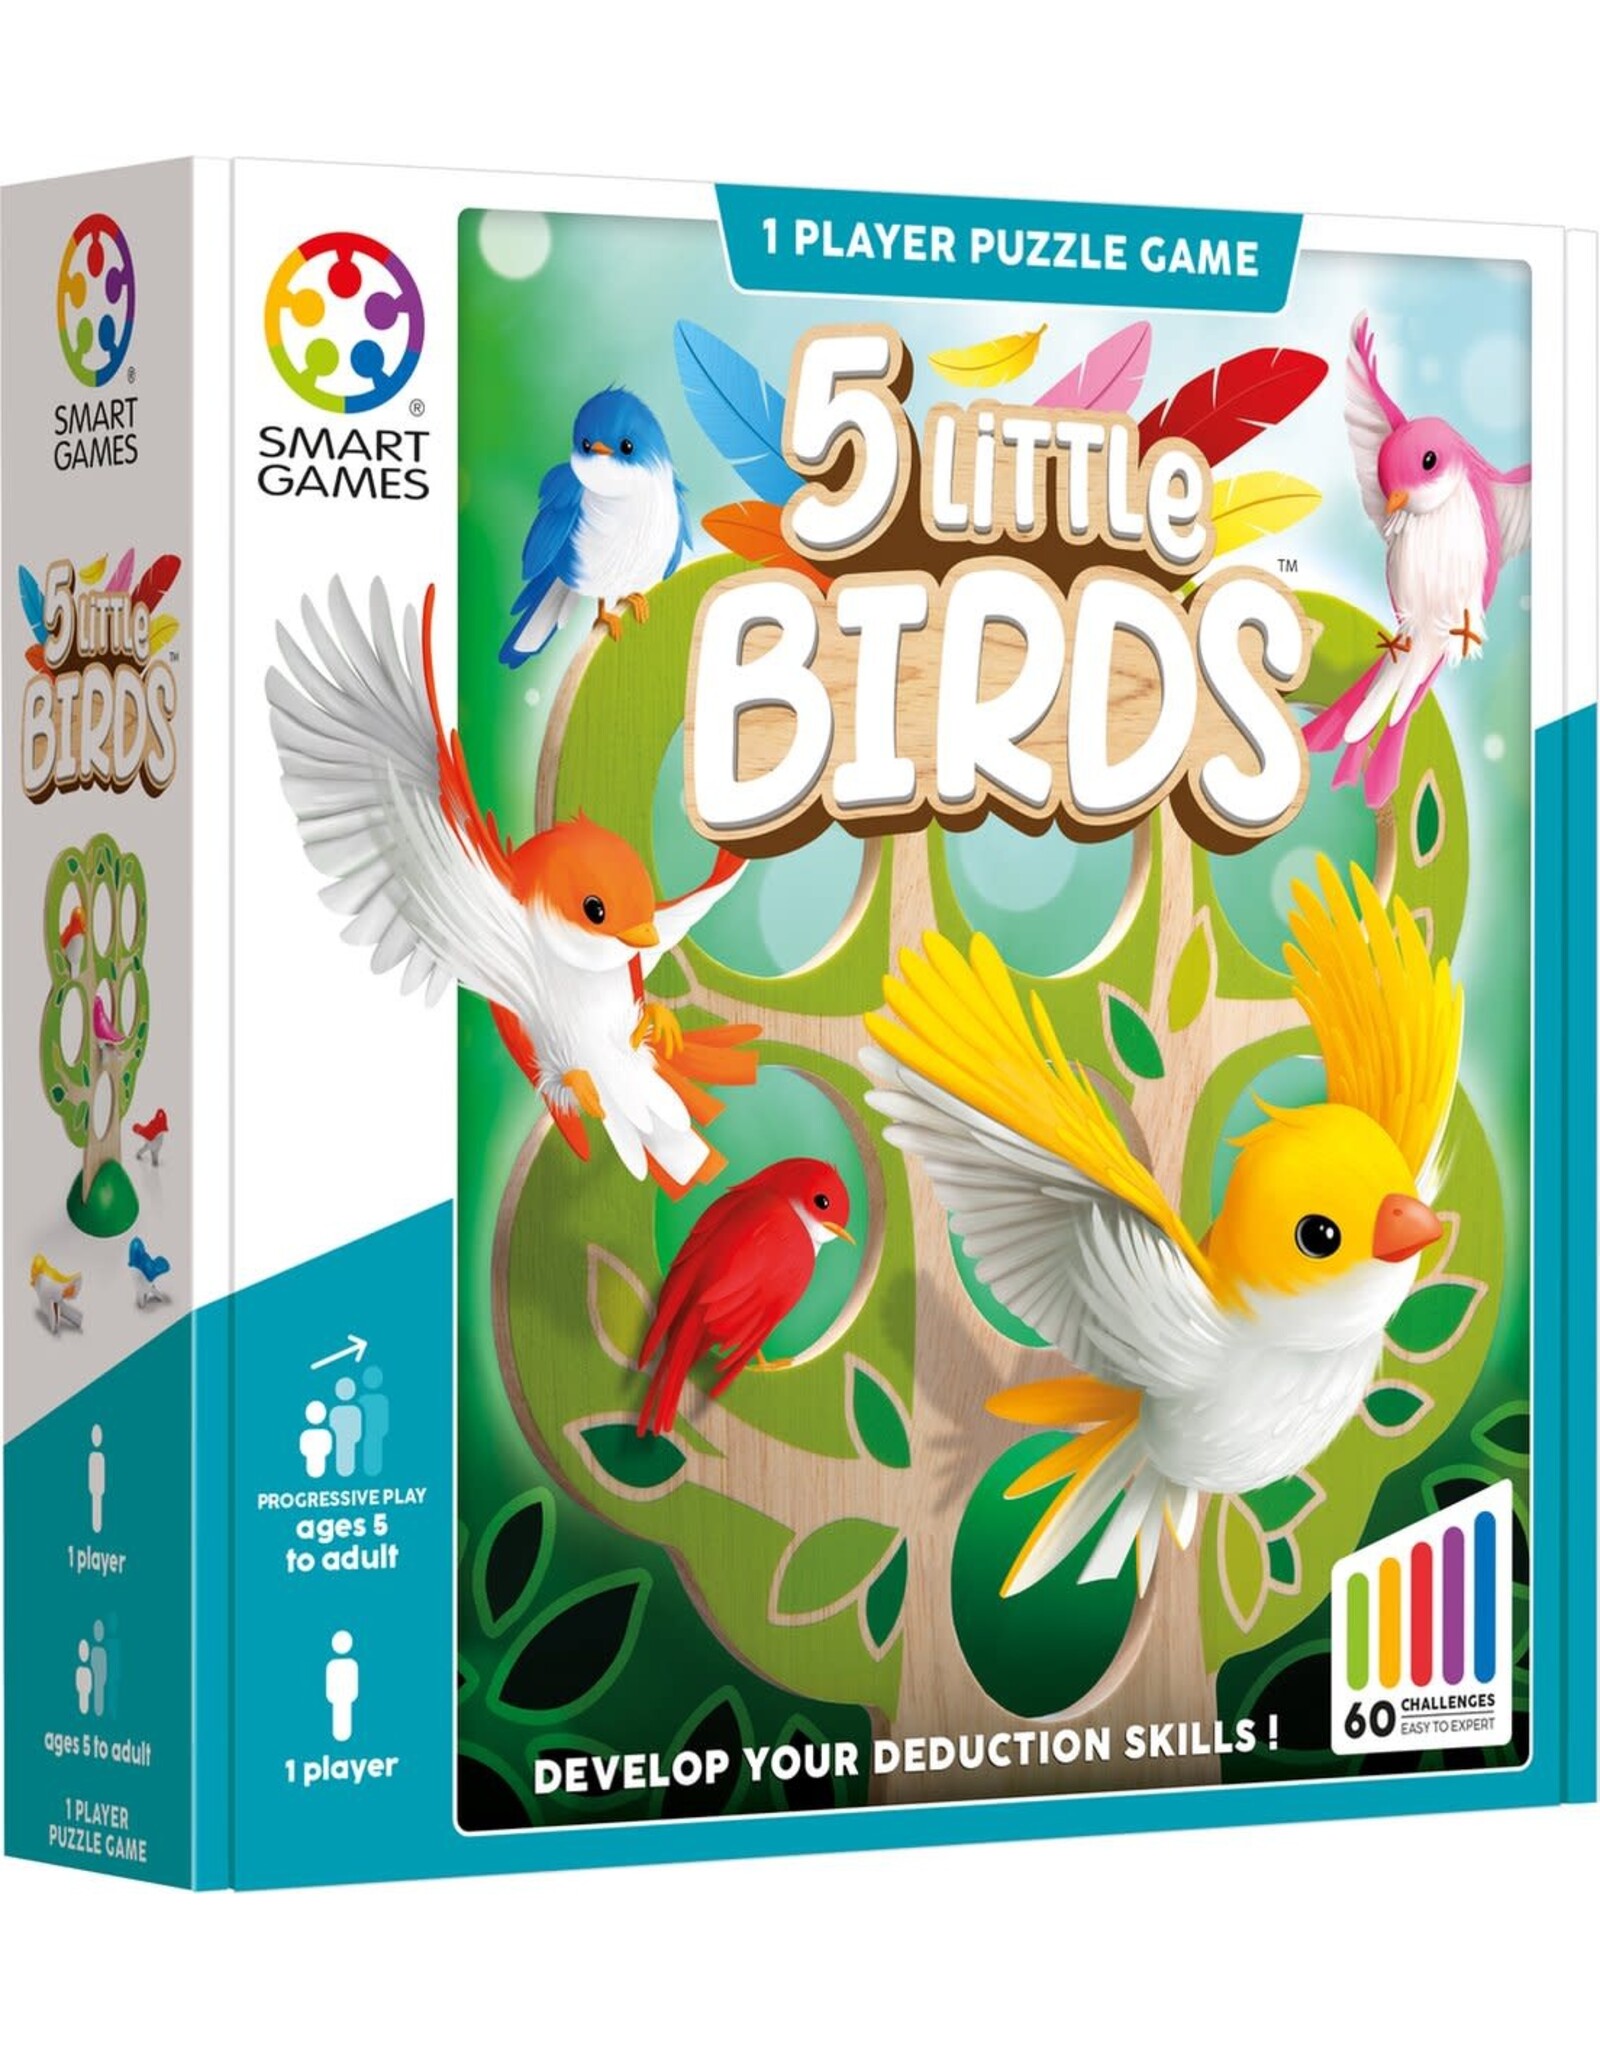 SmartGames Smart Games Classic - 5 Little Birds